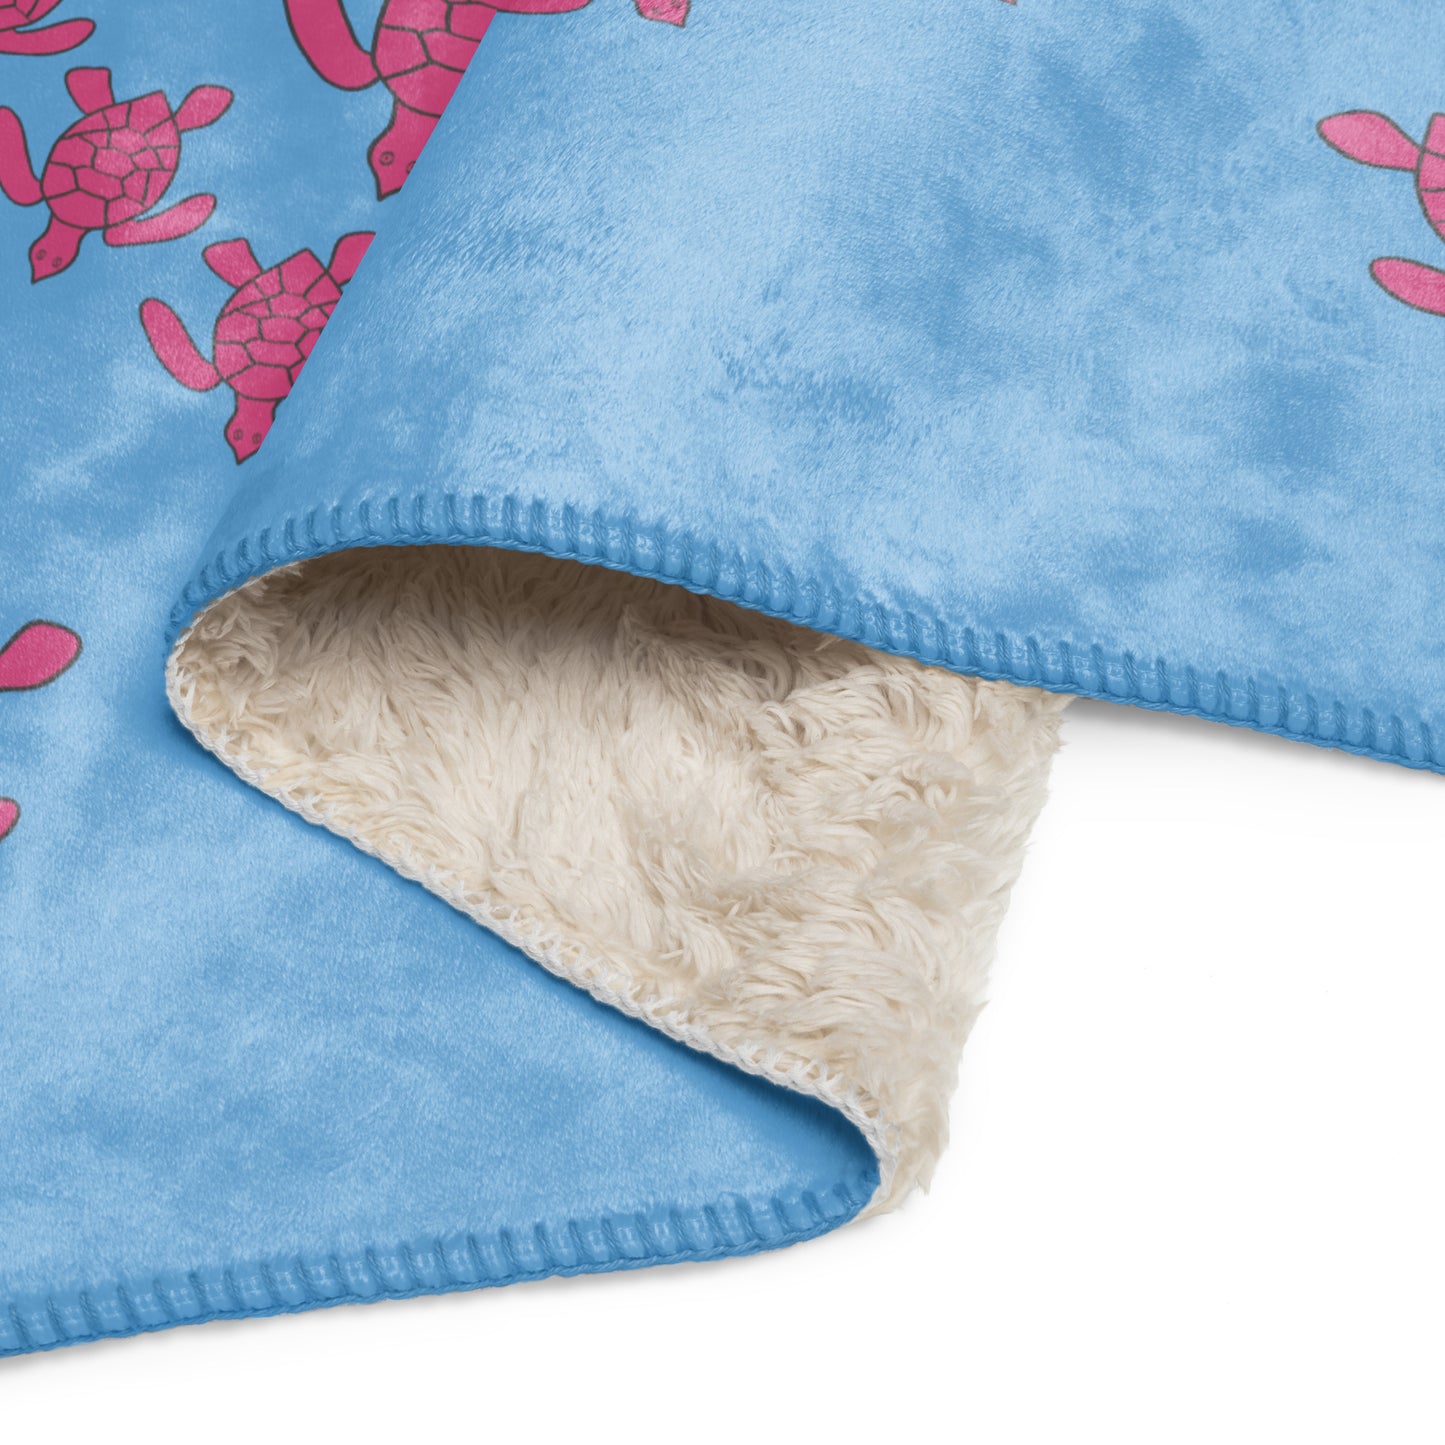 Turtle Sherpa blanket - Pink on Blue